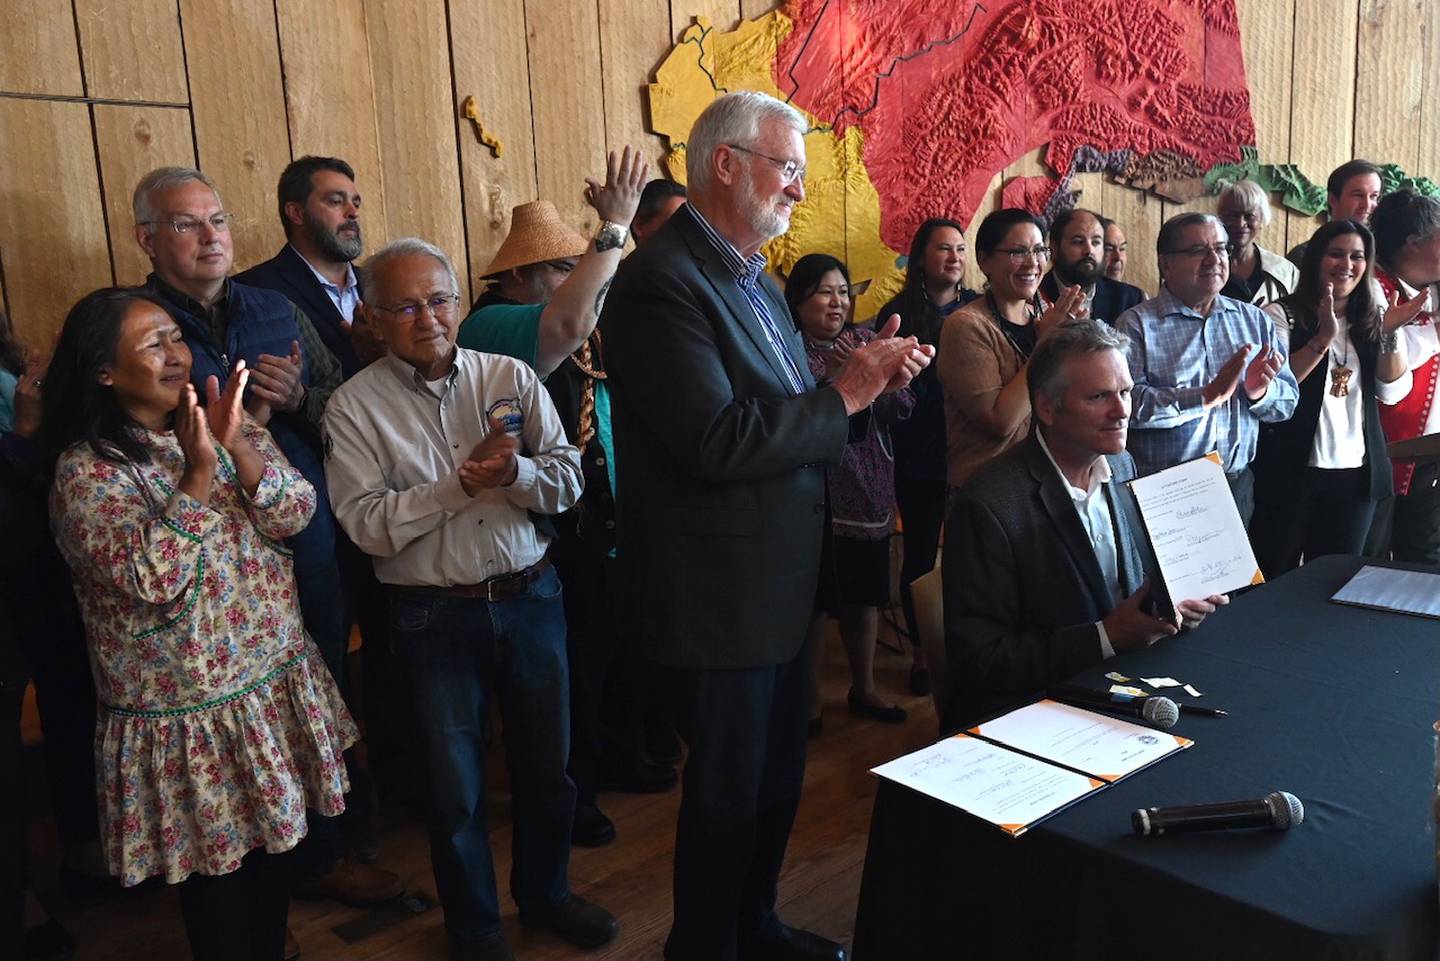 Dunleavy bill signing tribal recognition bill